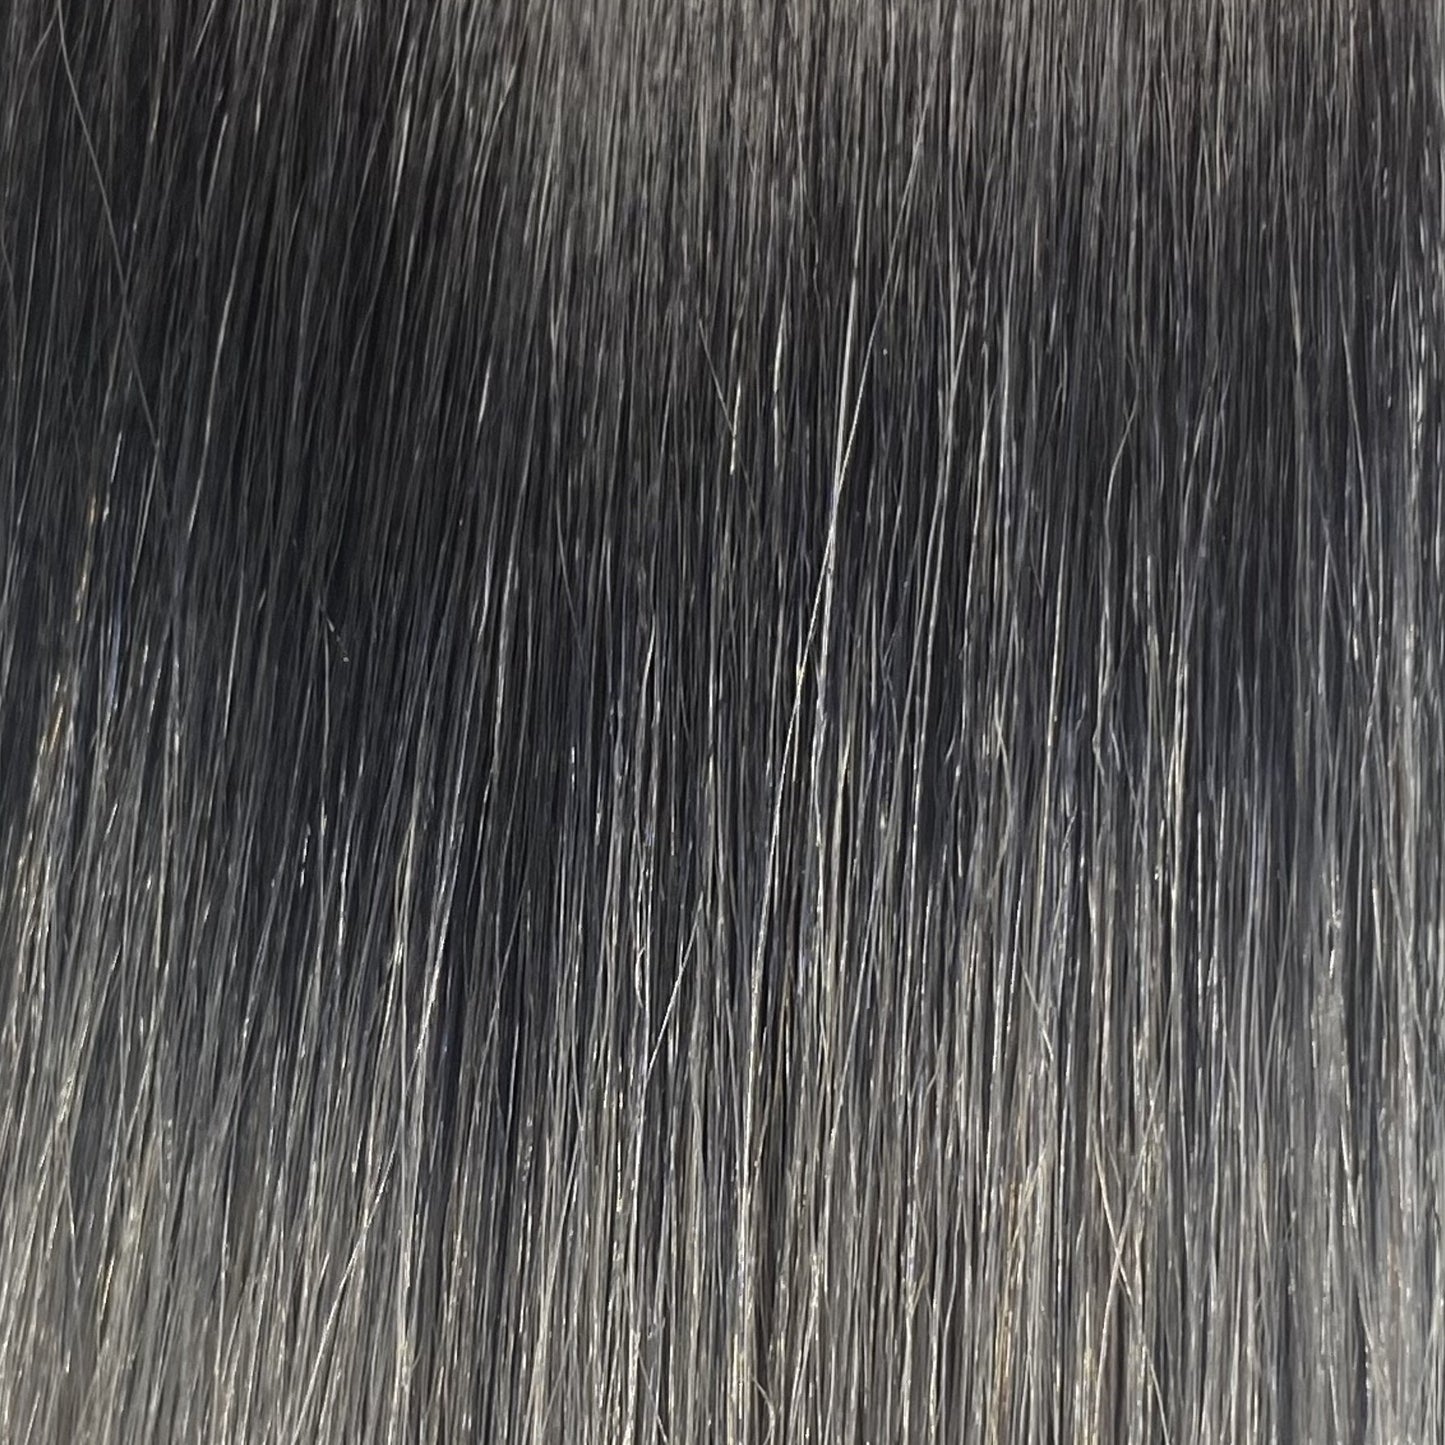 Fusion hair extensions #1B & 1006 - 50cm/20 inches - Black into Silver Ombre Fusion Euro So Cap 